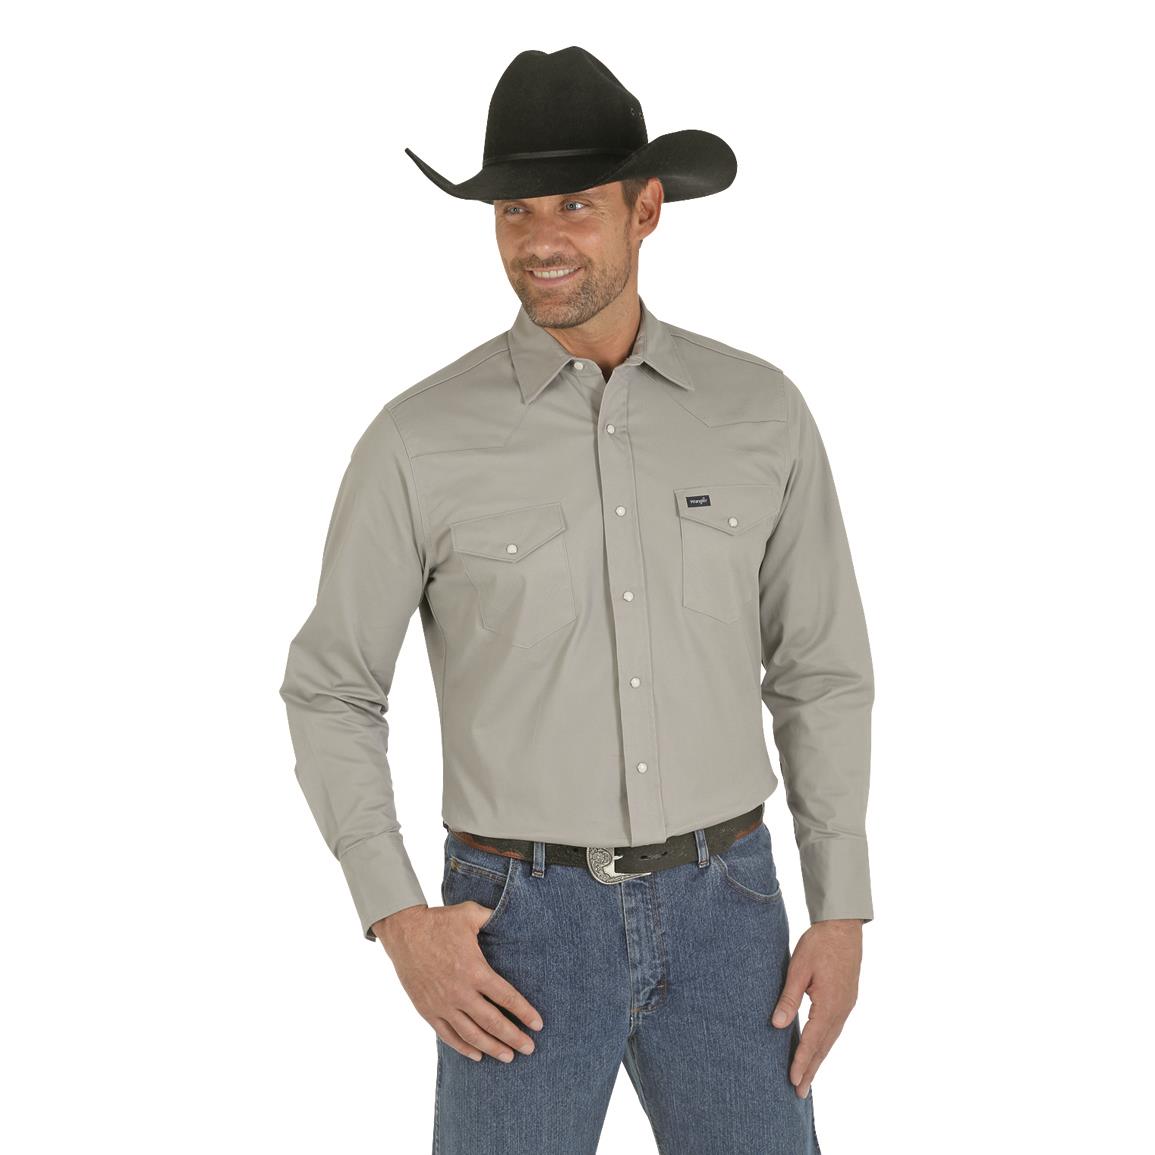 Wrangler Premium Performance Advanced Comfort Cowboy Cut Long Sleeved Shirt  - 670784, Shirts & Polos at Sportsman's Guide